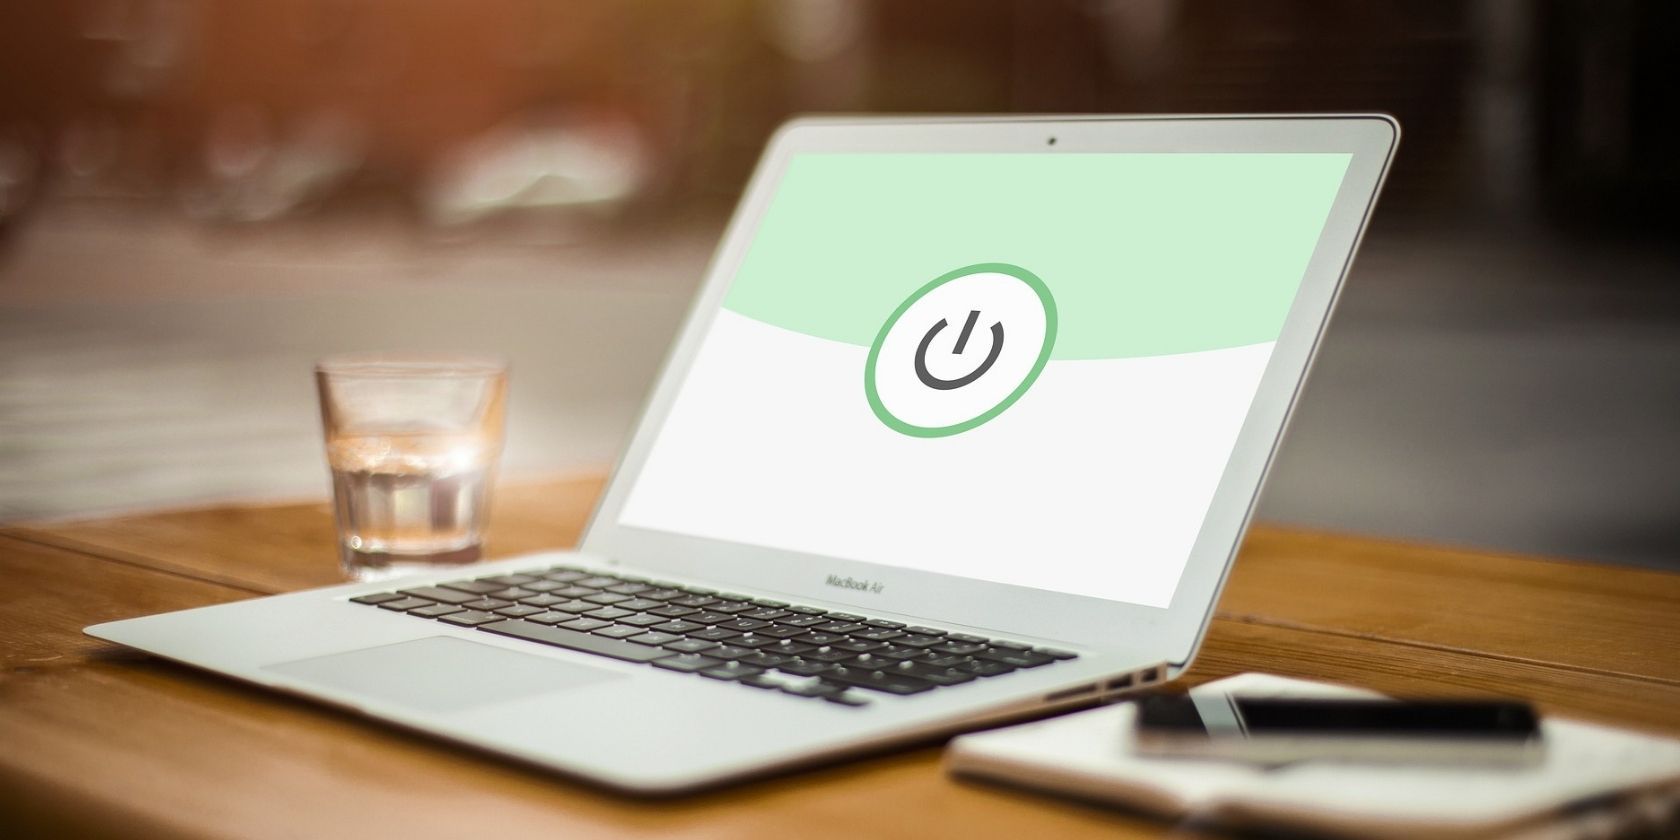 green power icon on laptop screen